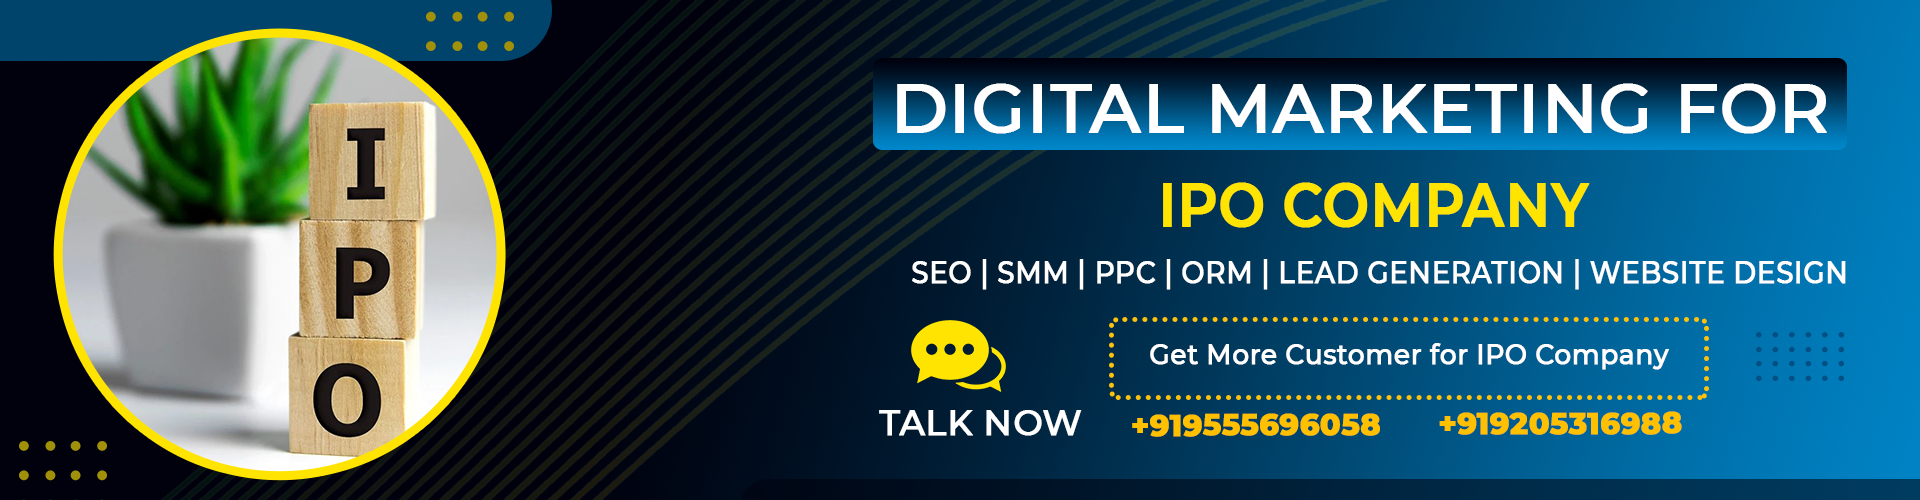 digital-marketing-for-ipo-company